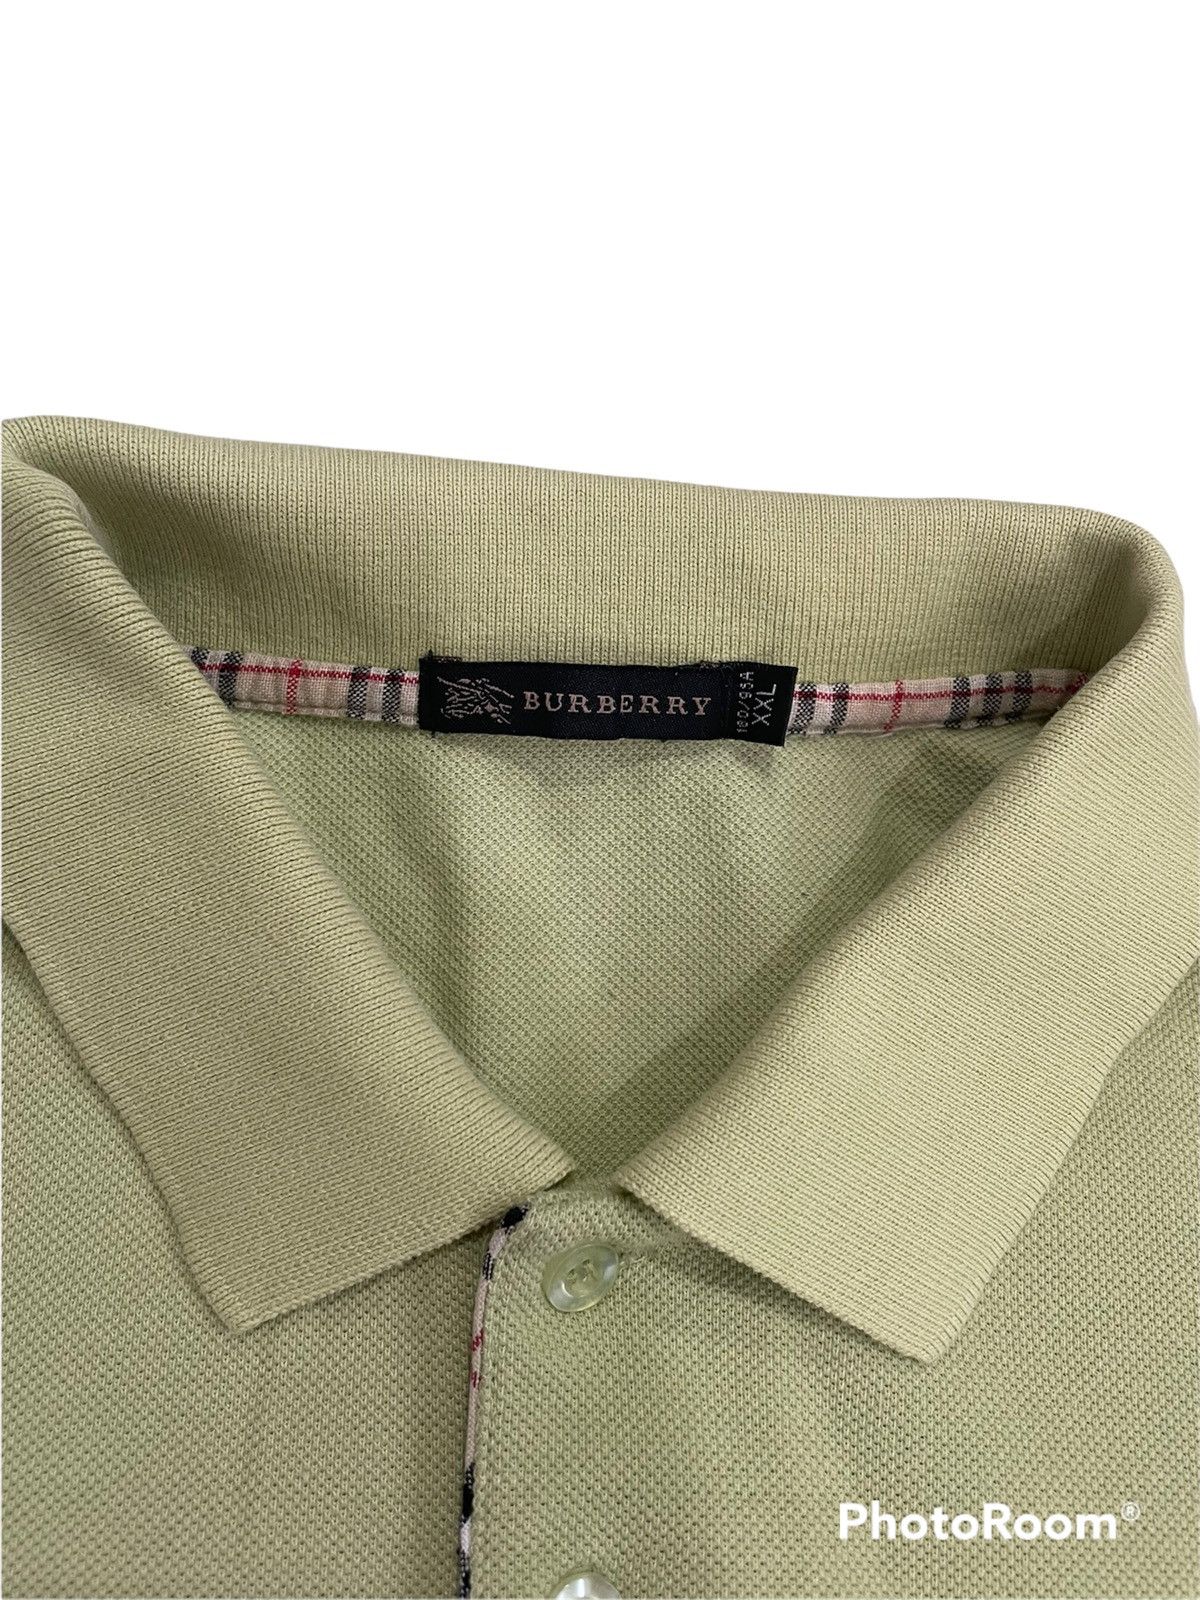 Burberry Burberry London green polo shirt men’s size xxl Size US XXL / EU 58 / 5 - 2 Preview